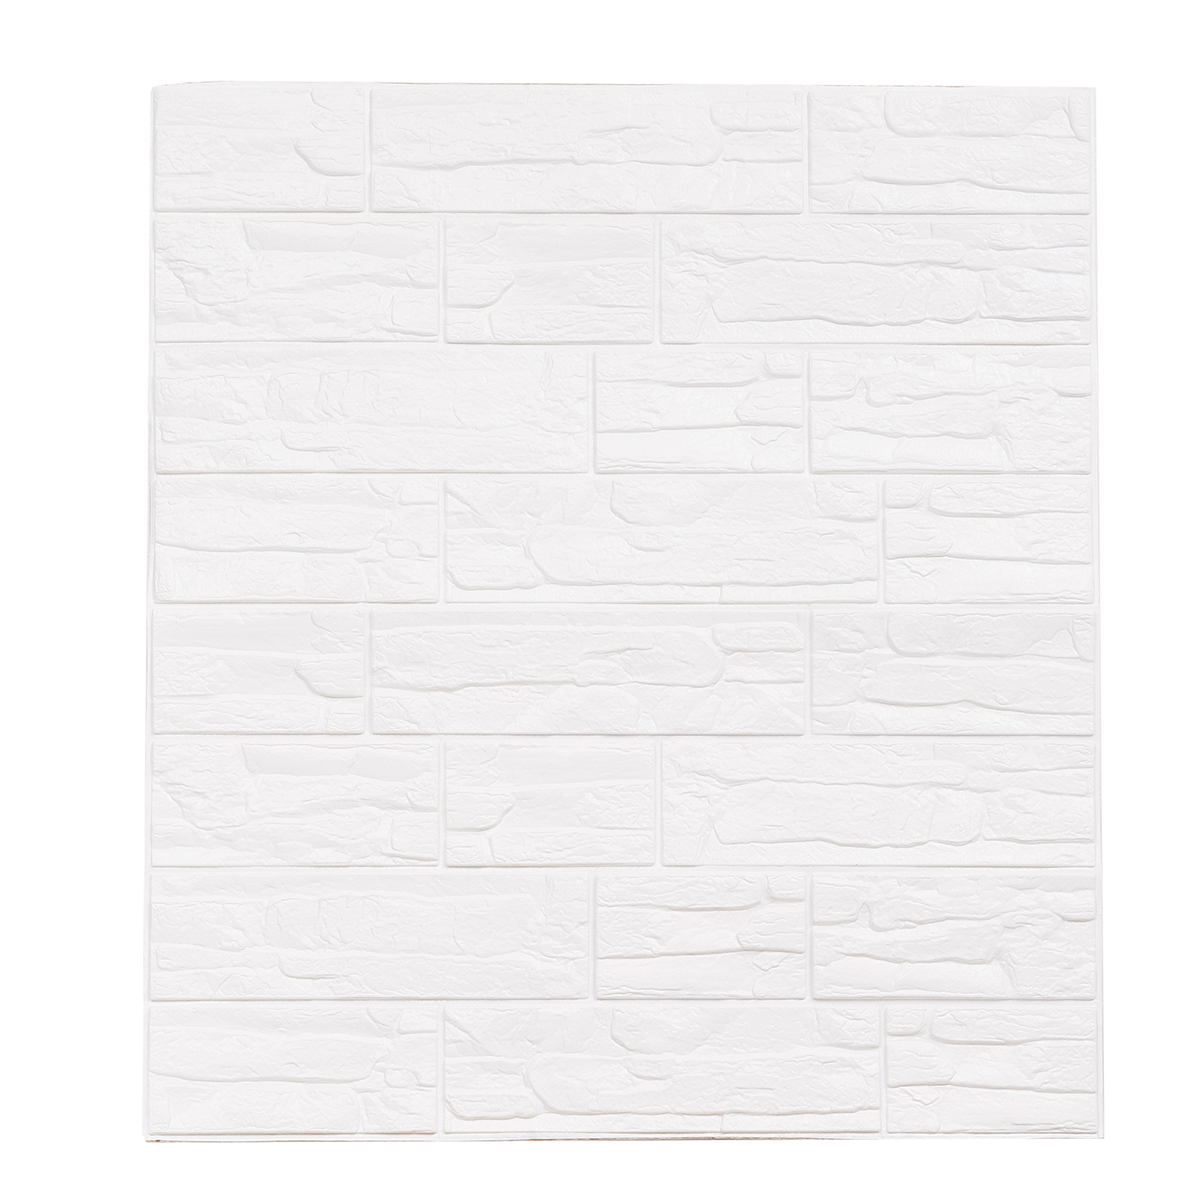 10Pcs-Set-3D-Brick-Wall-Stickers-Panels-Self-Adhesive-Decals-Bedroom-Home-Decoration-1715678-6